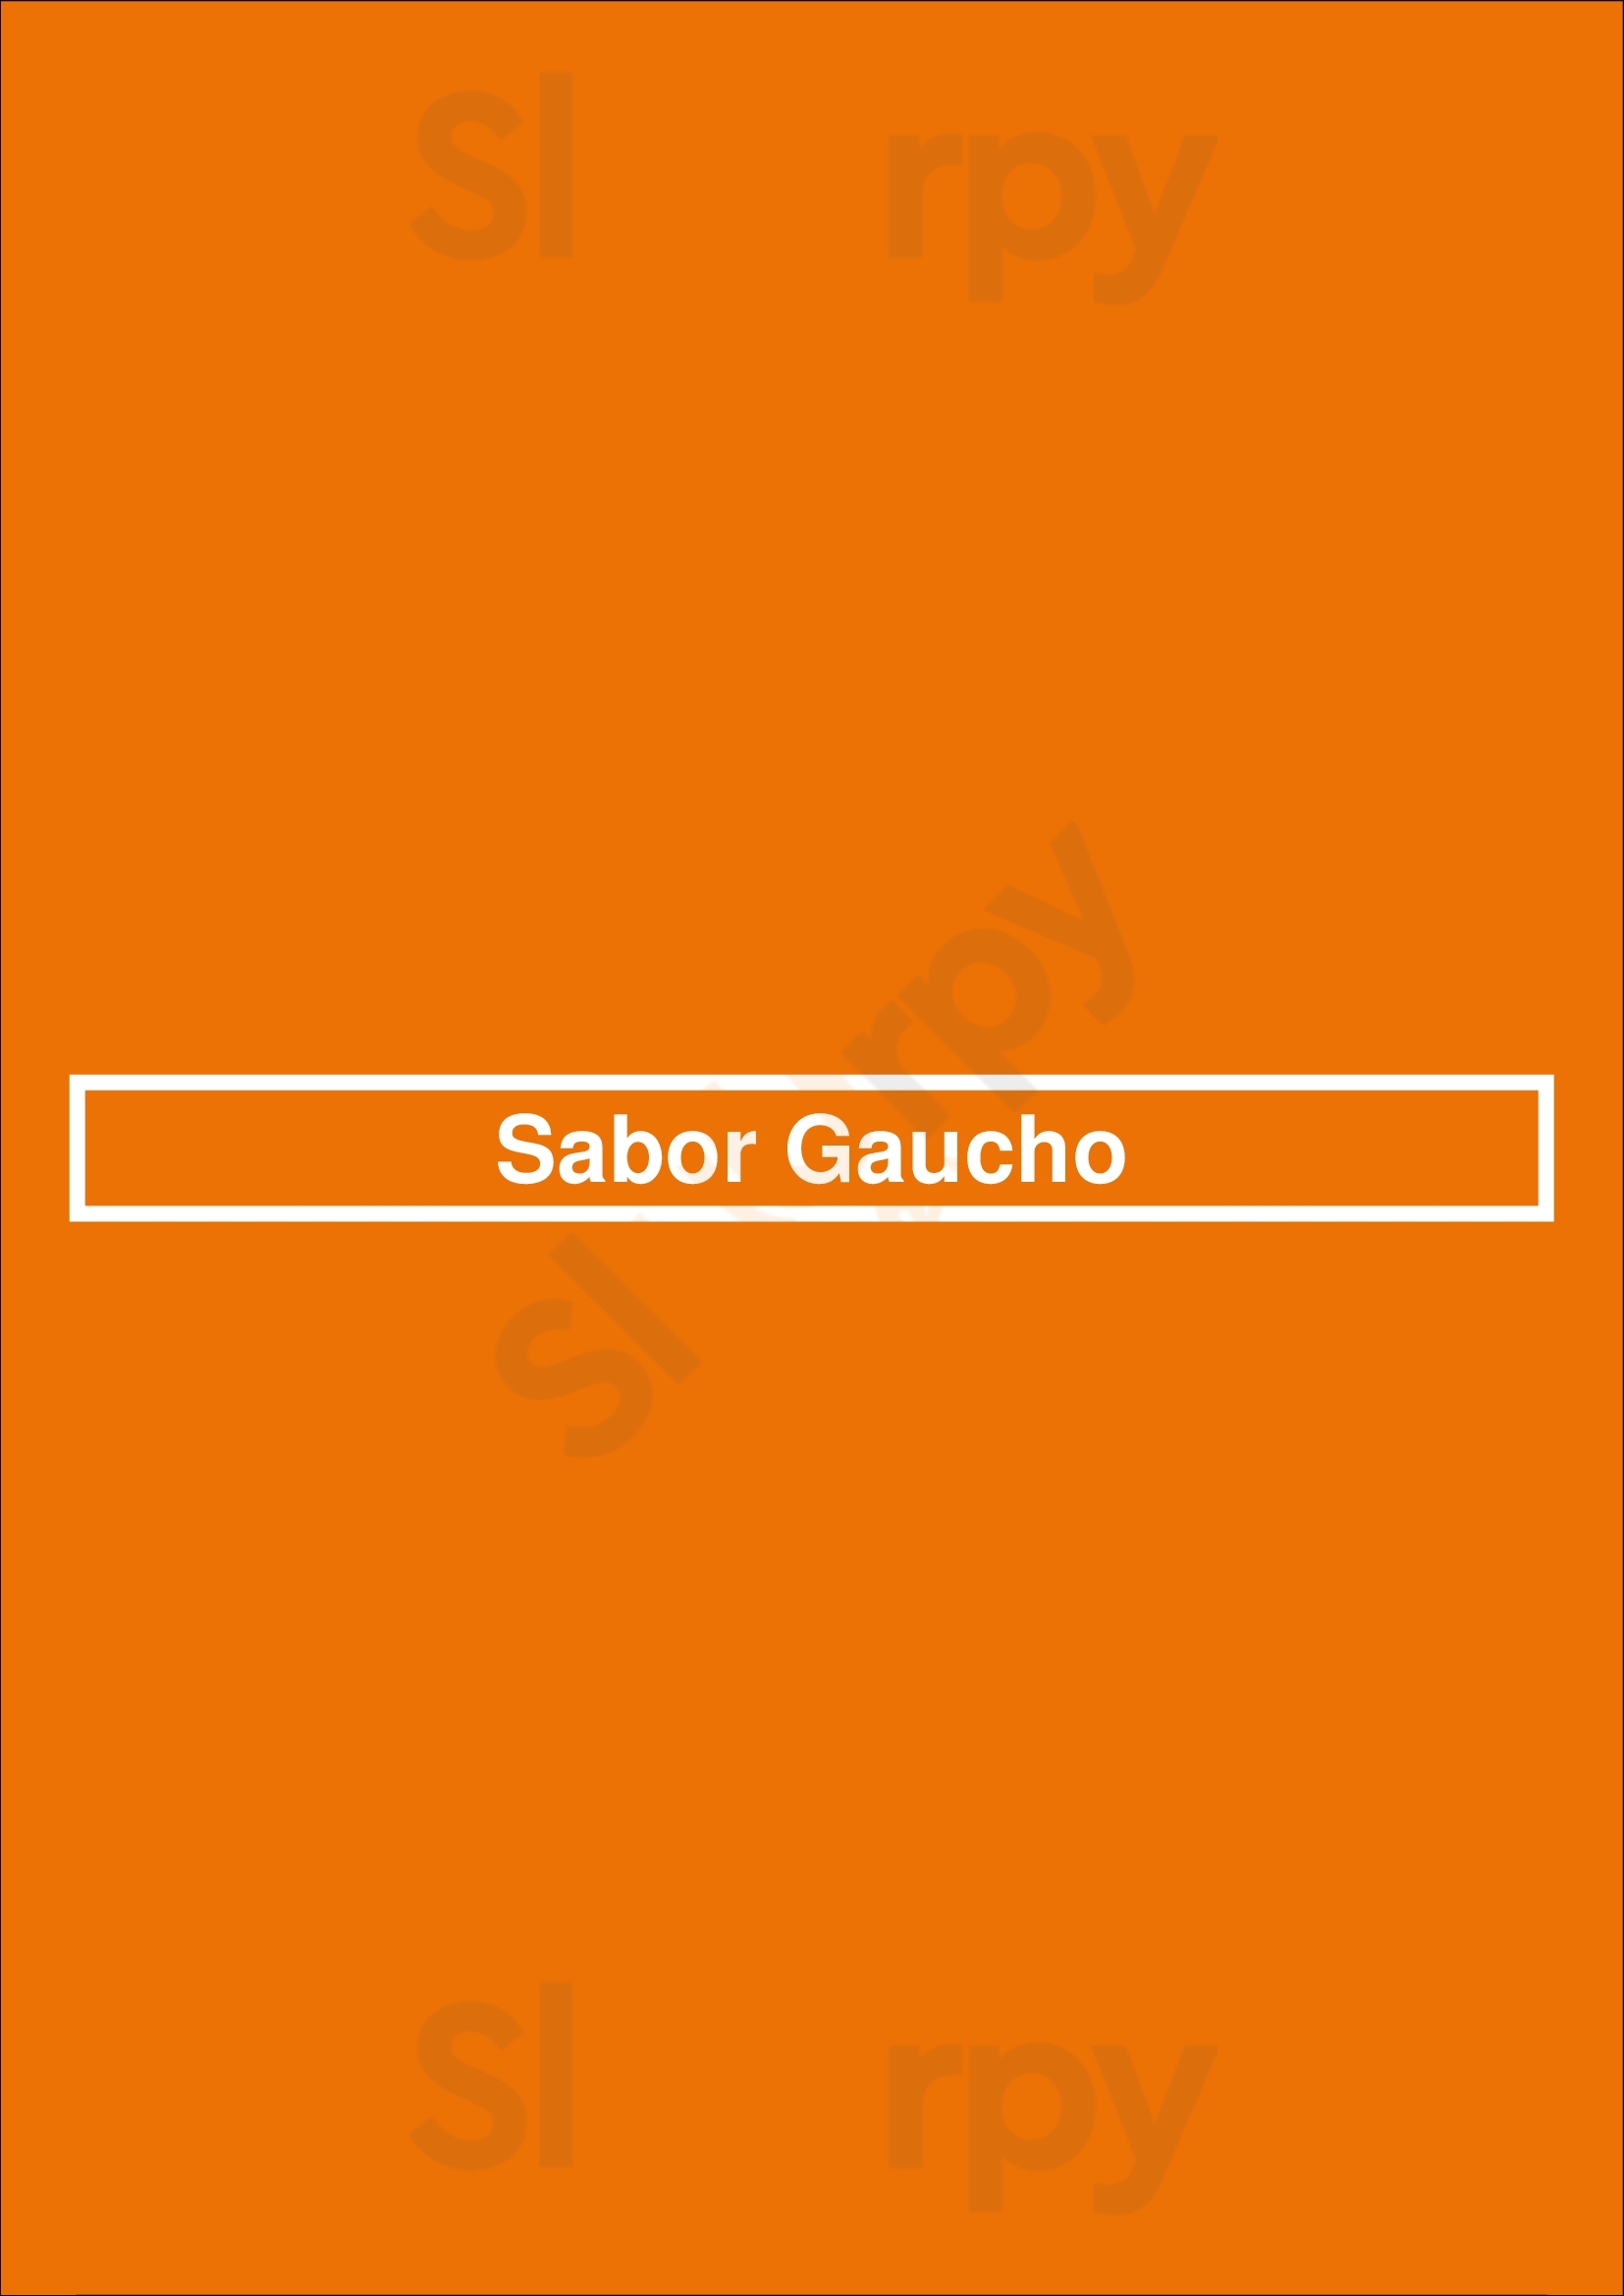 Sabor Gaucho Lisboa Menu - 1